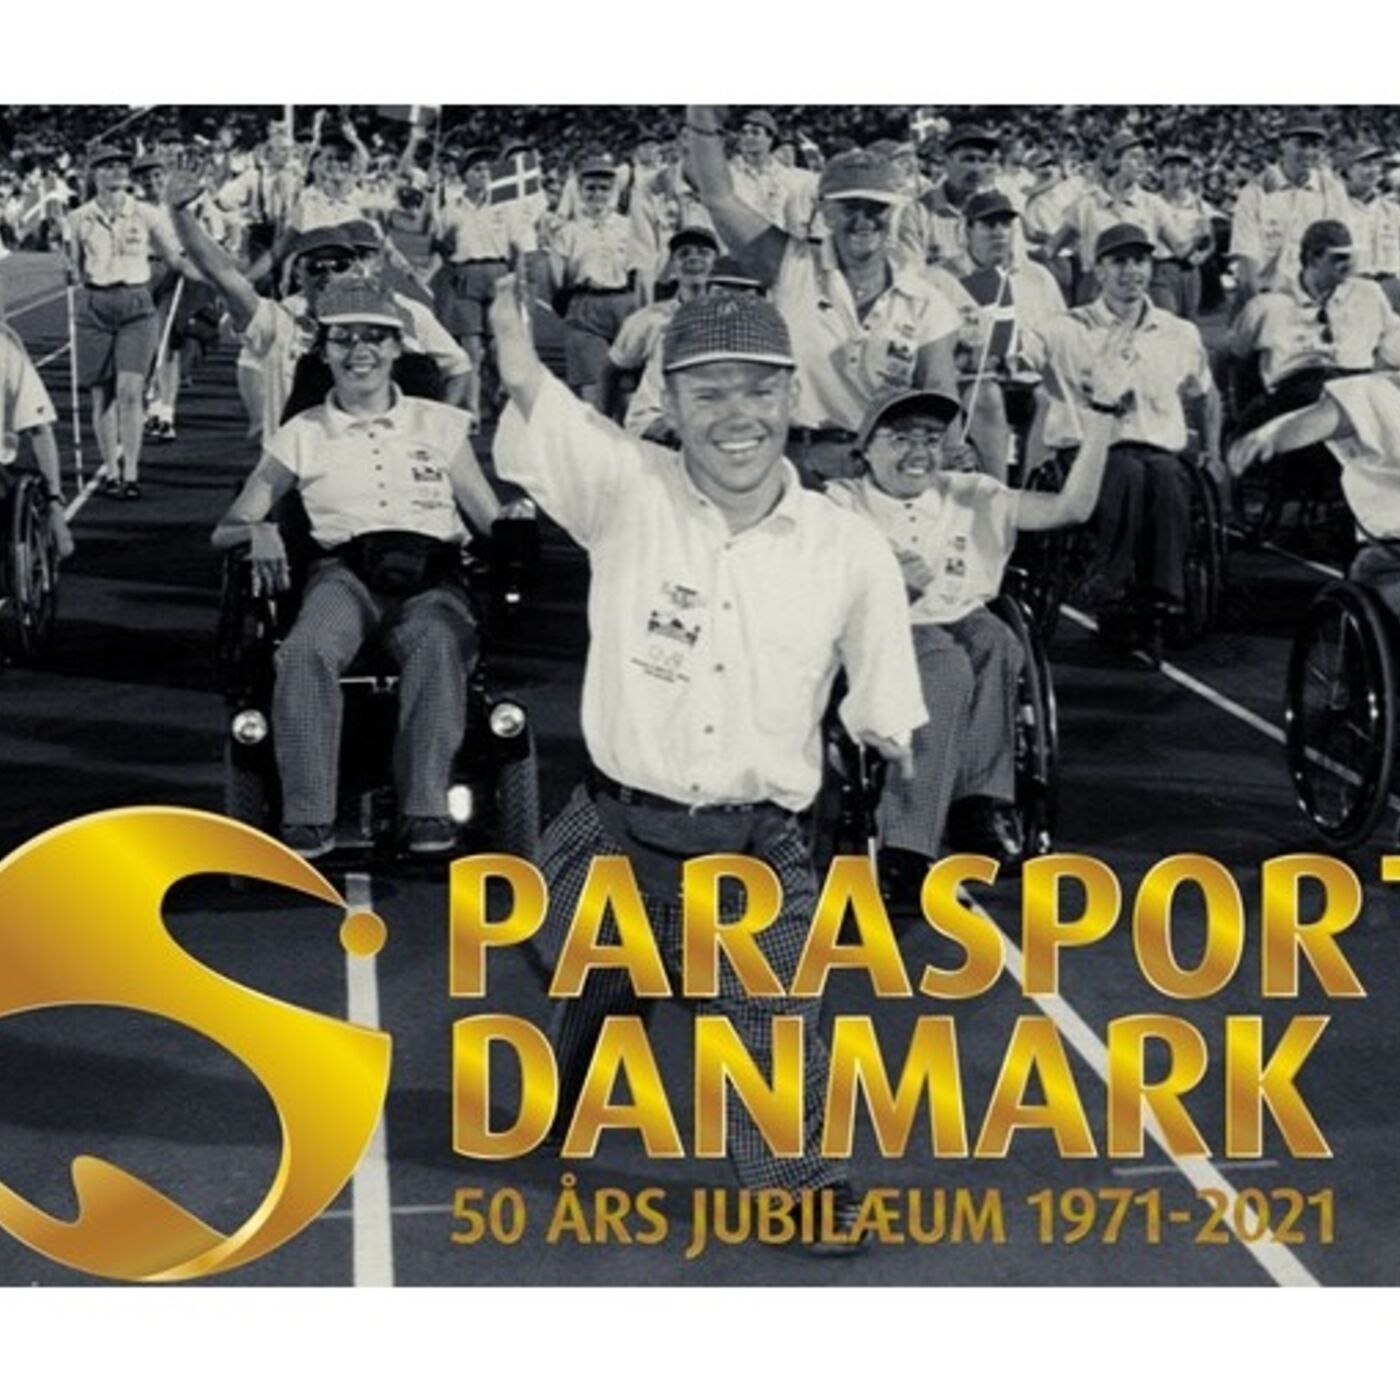 Parasport Danmark igennem 50 år